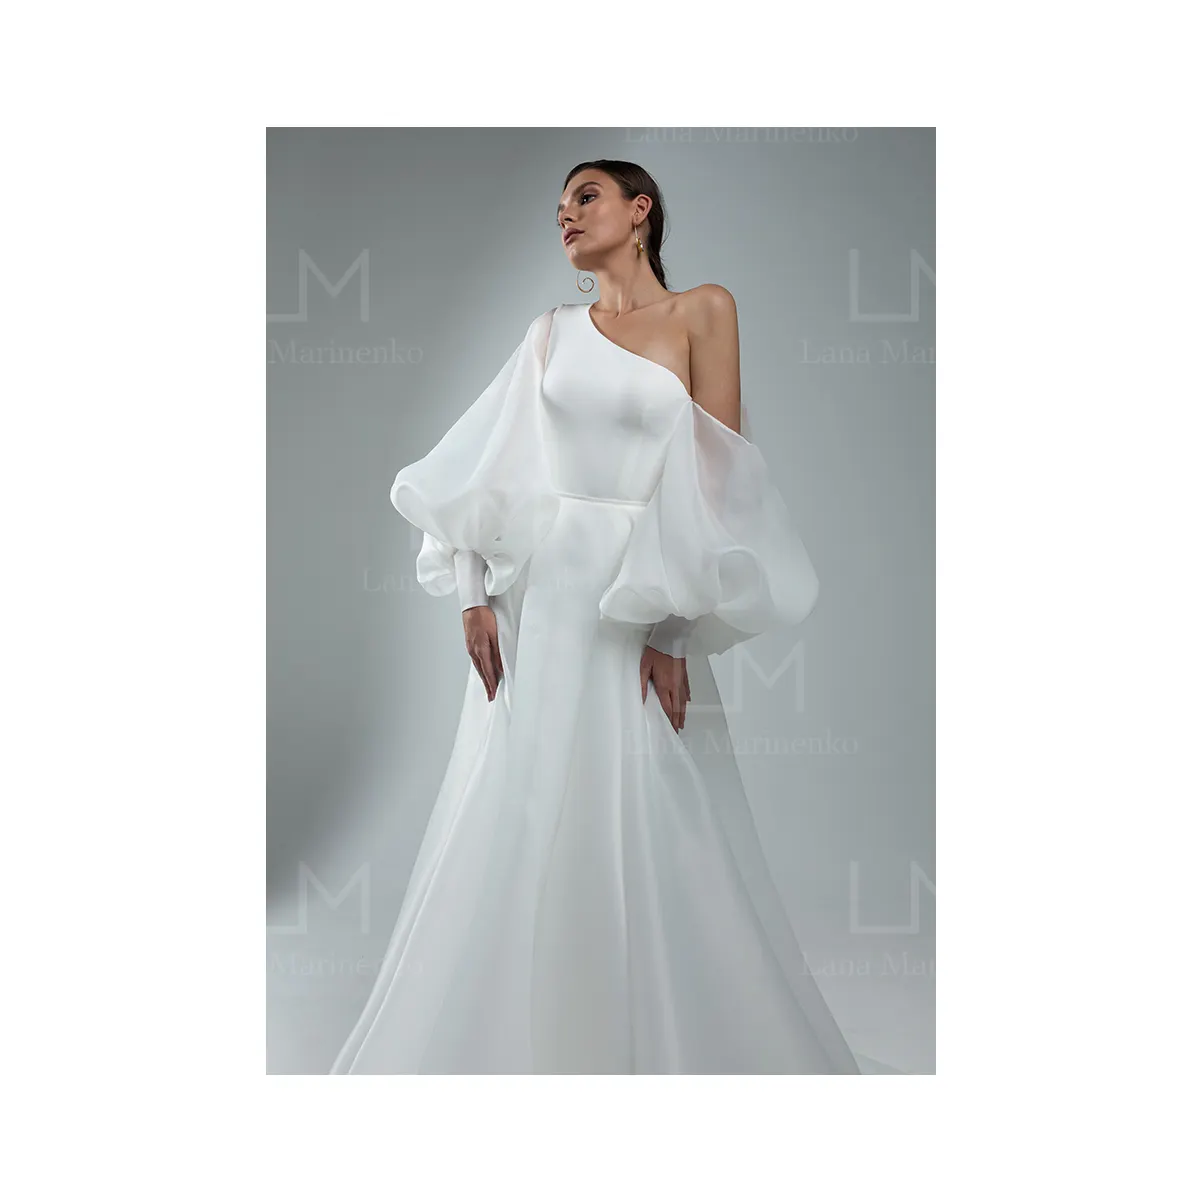 Elegant 2 in 1 dress with detachable skirt one-shoulder light matte taffeta fabric "Lina" wedding gown wedding dress for bride